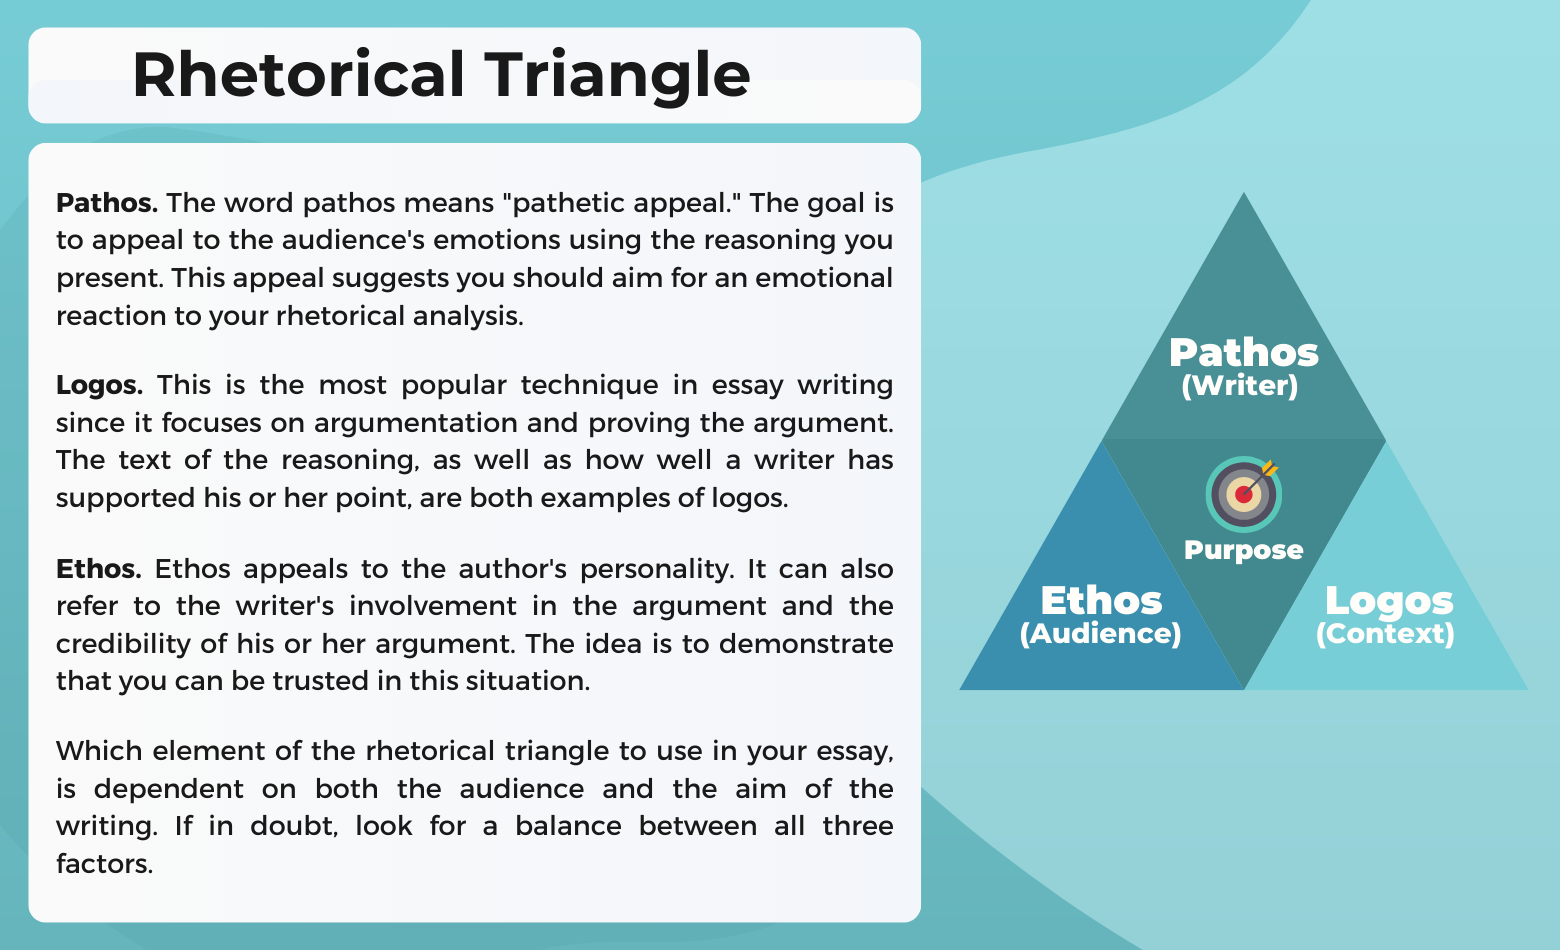 Rhetorical Triangle